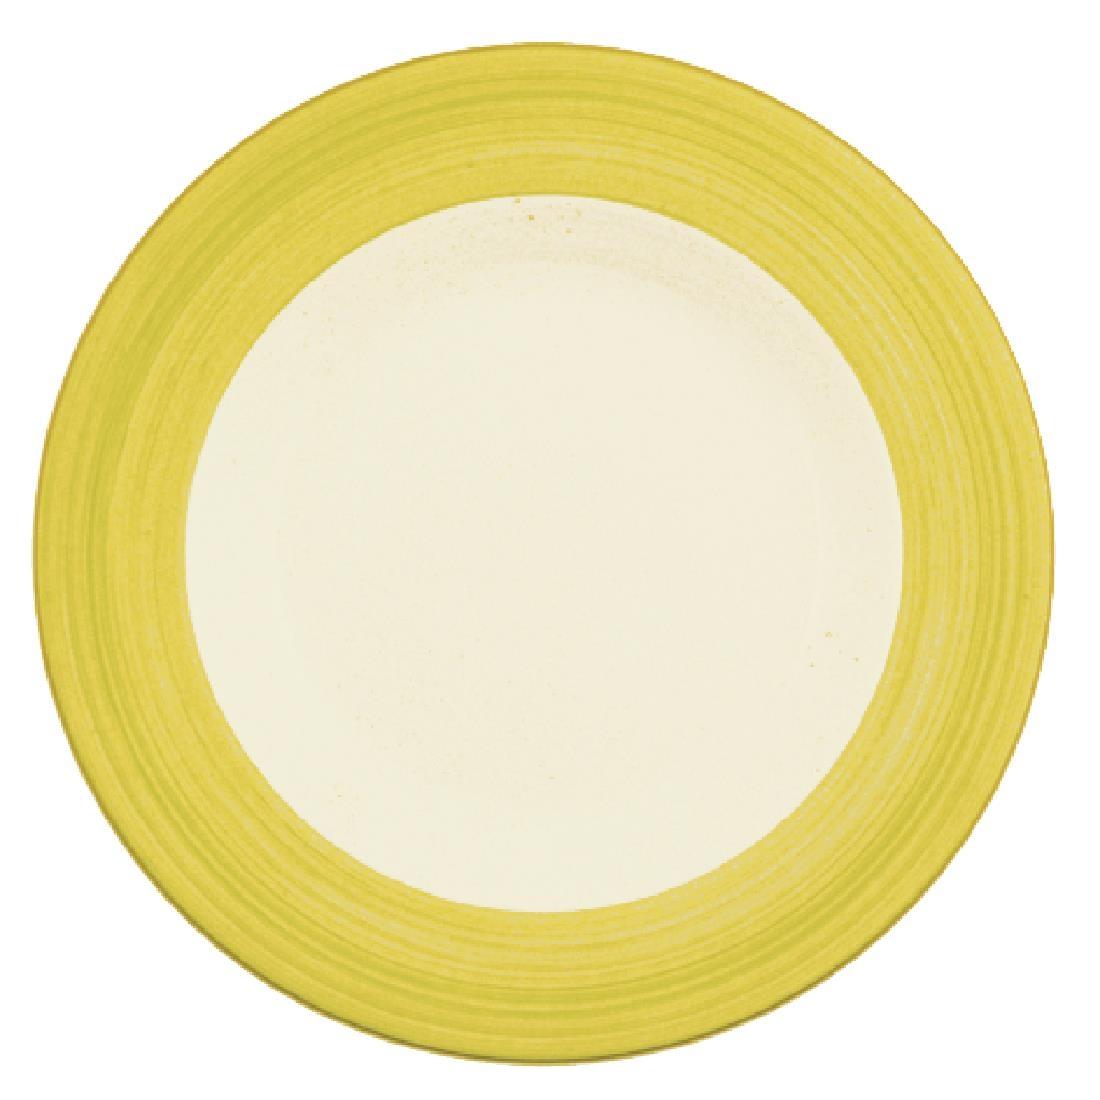 Steelite Rio Yellow Slimline Plates 157mm (Pack of 36) - V2970  - 1